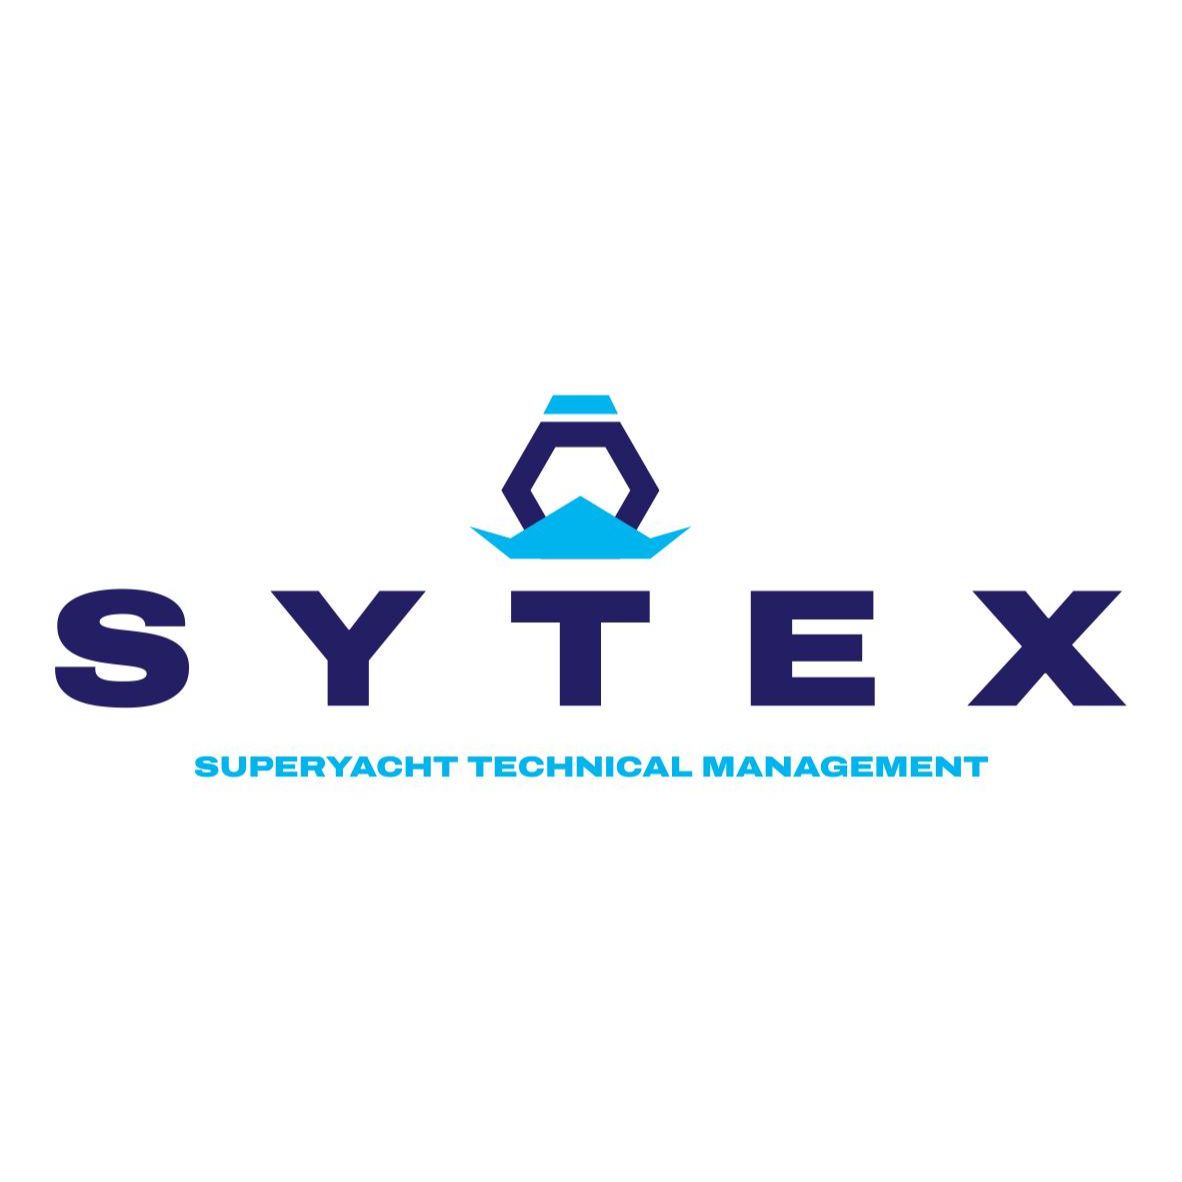 Sytex SuperYacht Refit